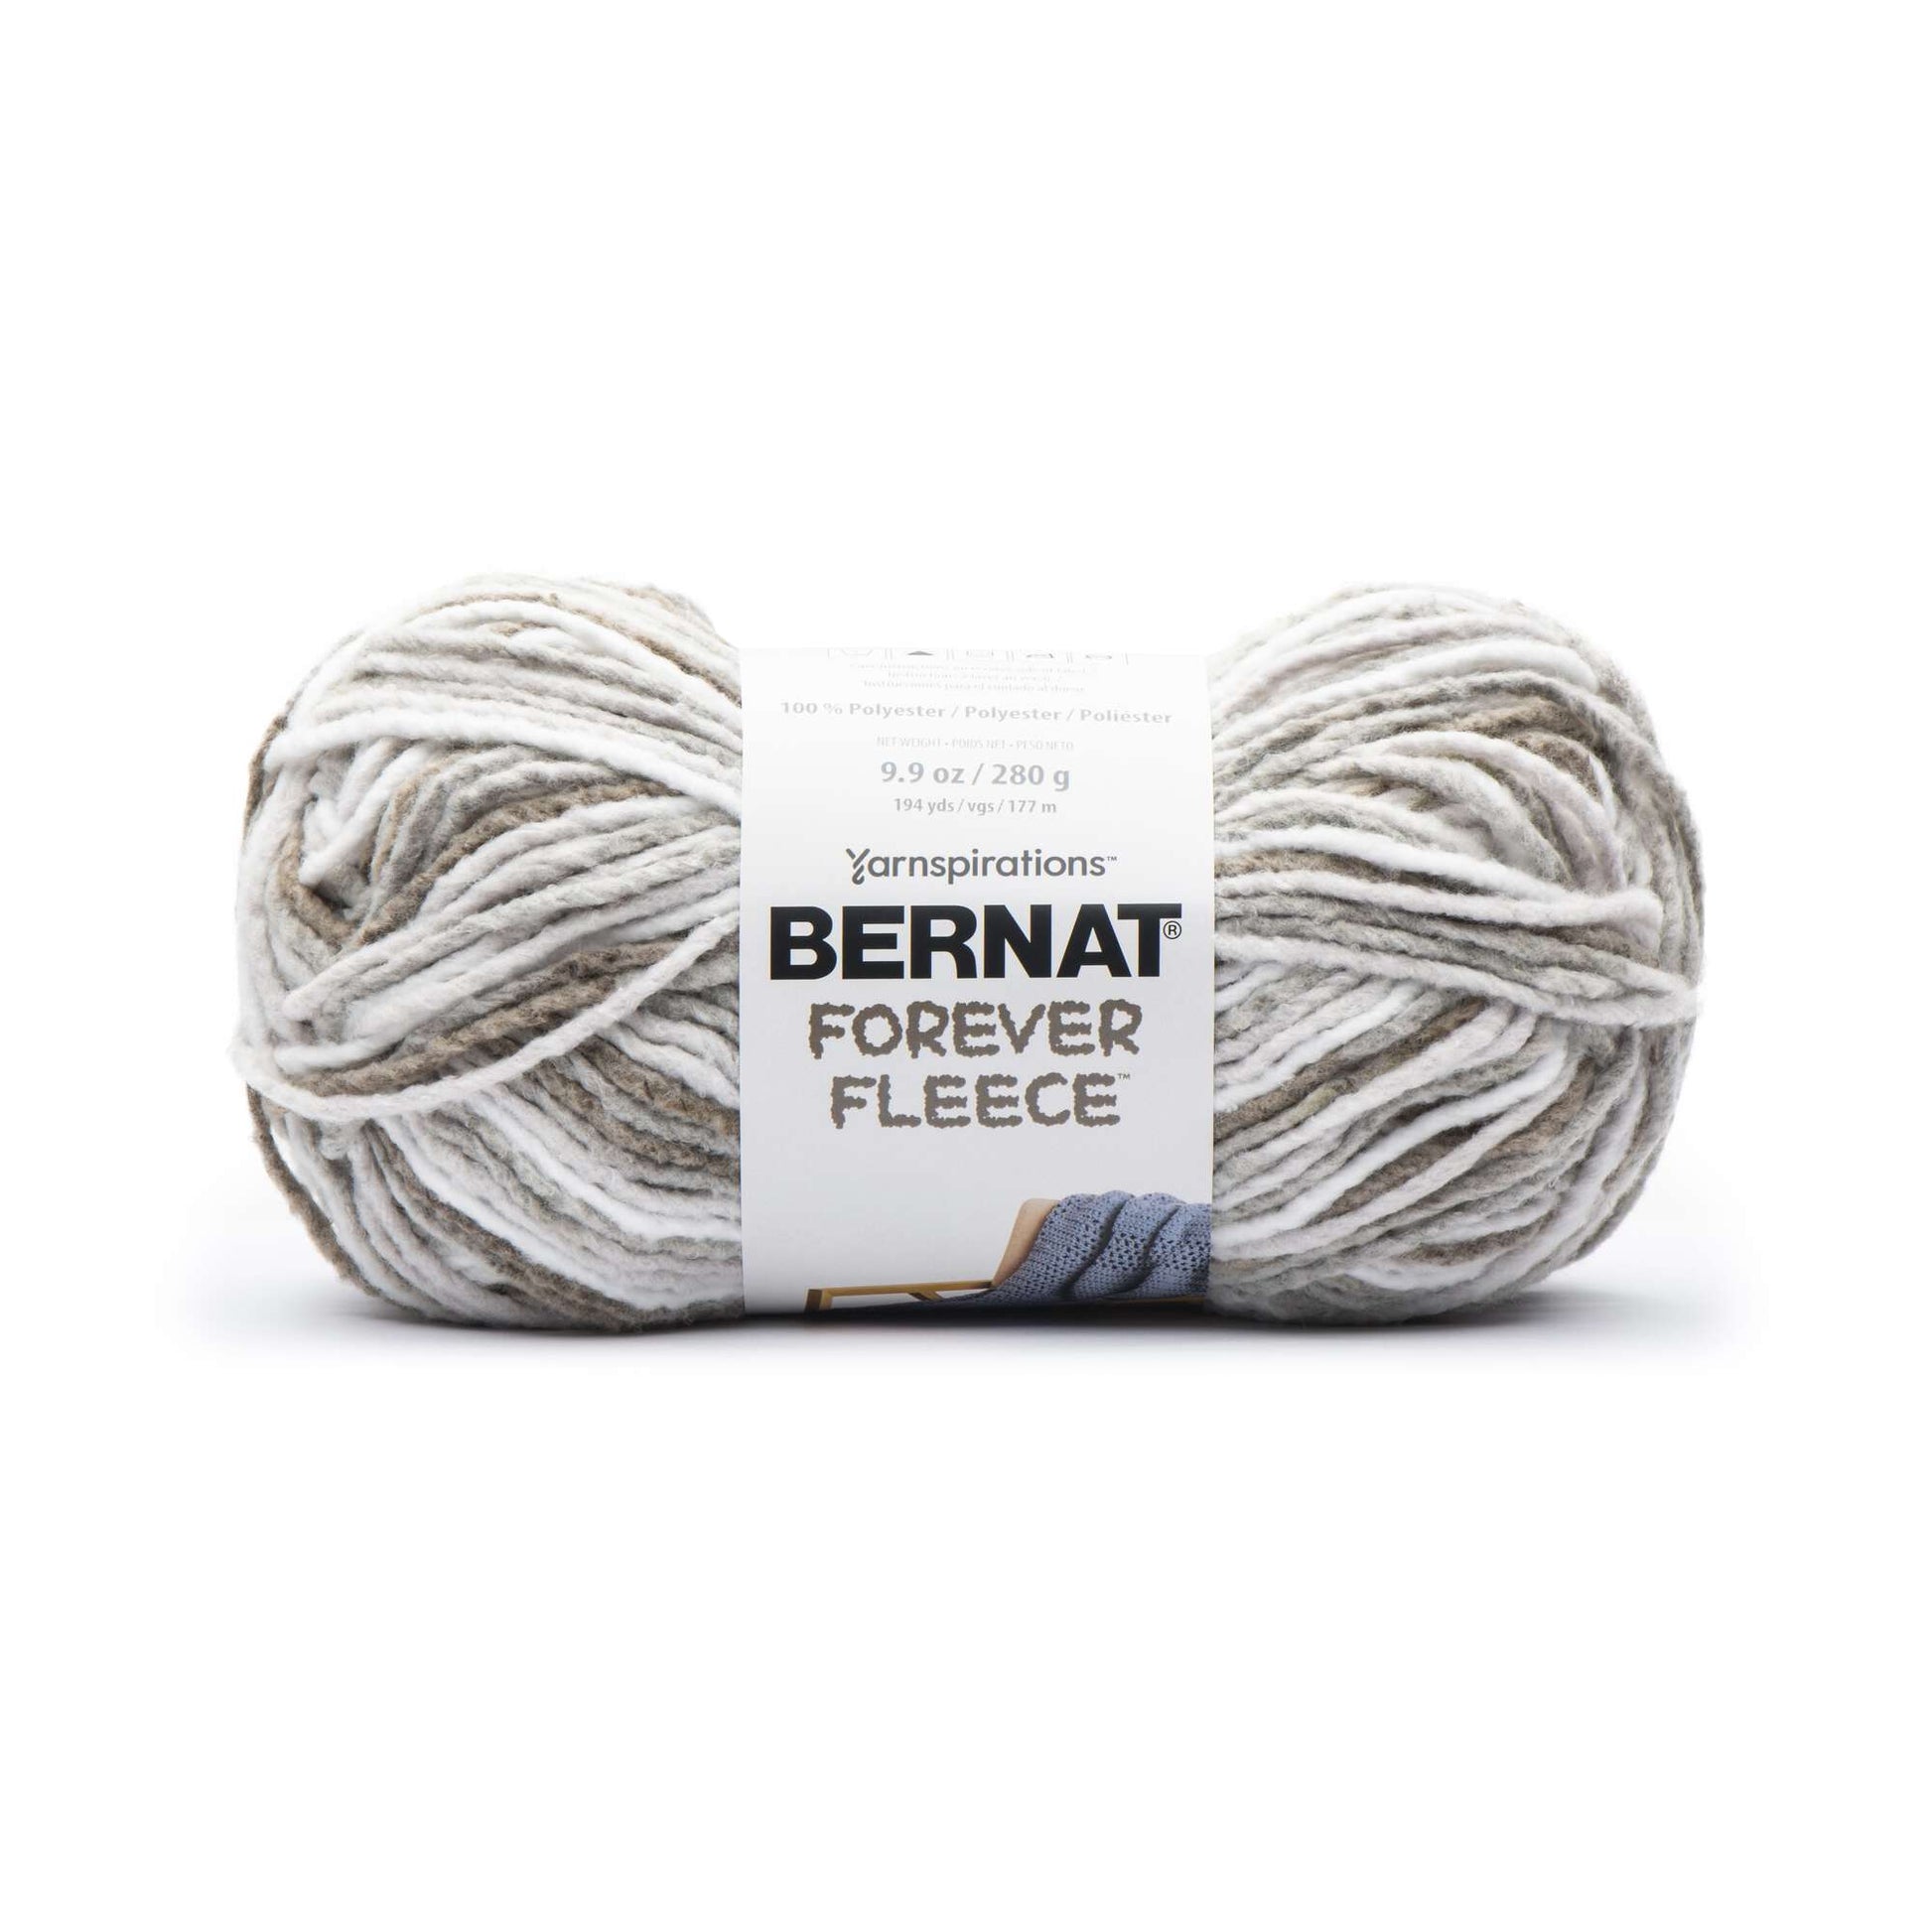 Bernat Forever Fleece Yarn - Peppermint